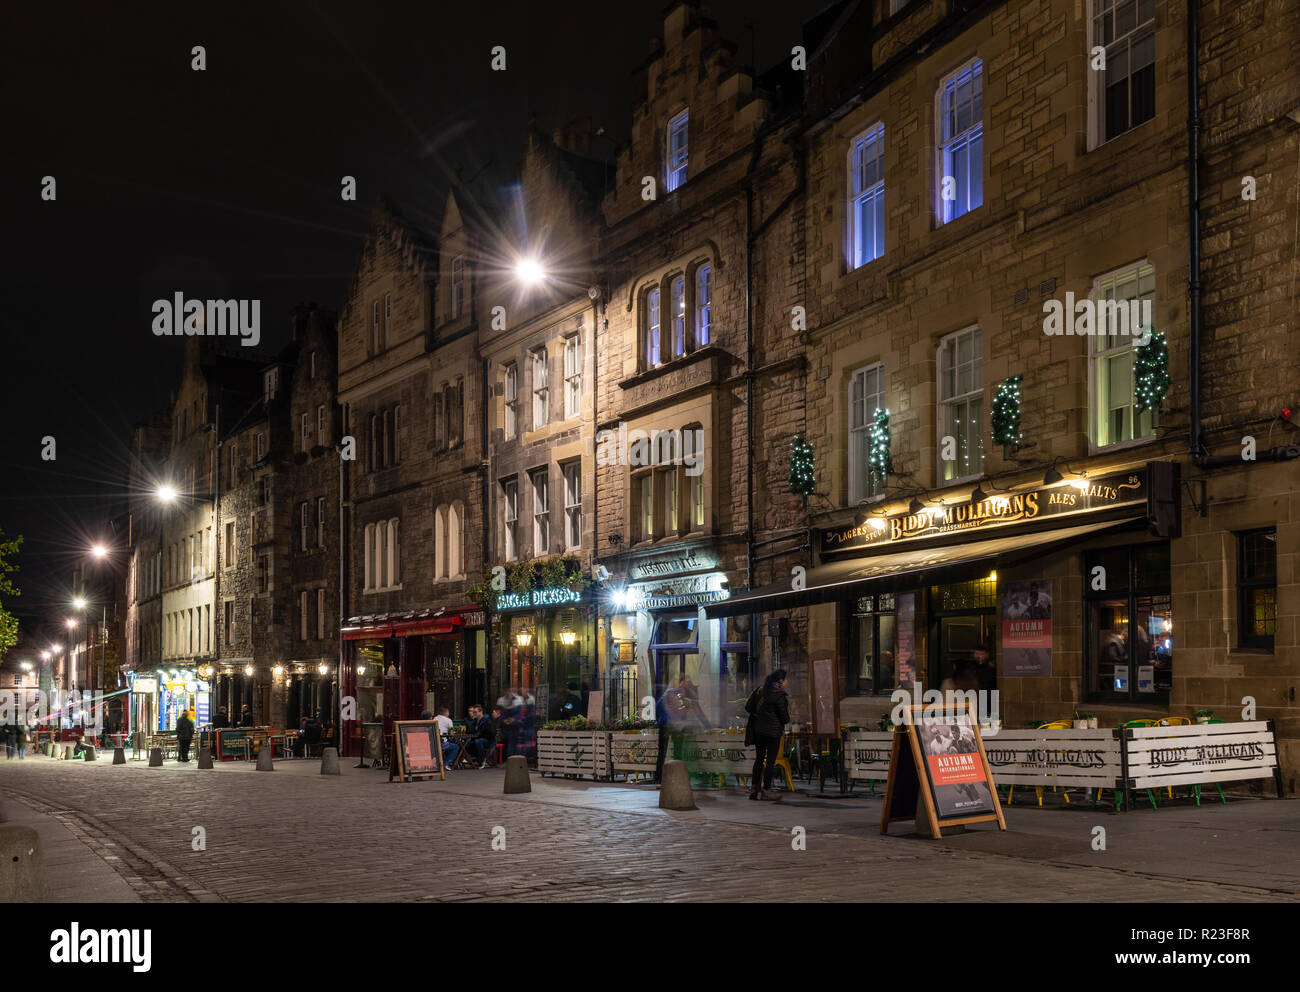 Edinburgh, Scotland, UK - November 2, 2018: Punters drink outside pubs and bars along Edinburgh's traditional cobbled Grassmarket street at night. Stock Photo